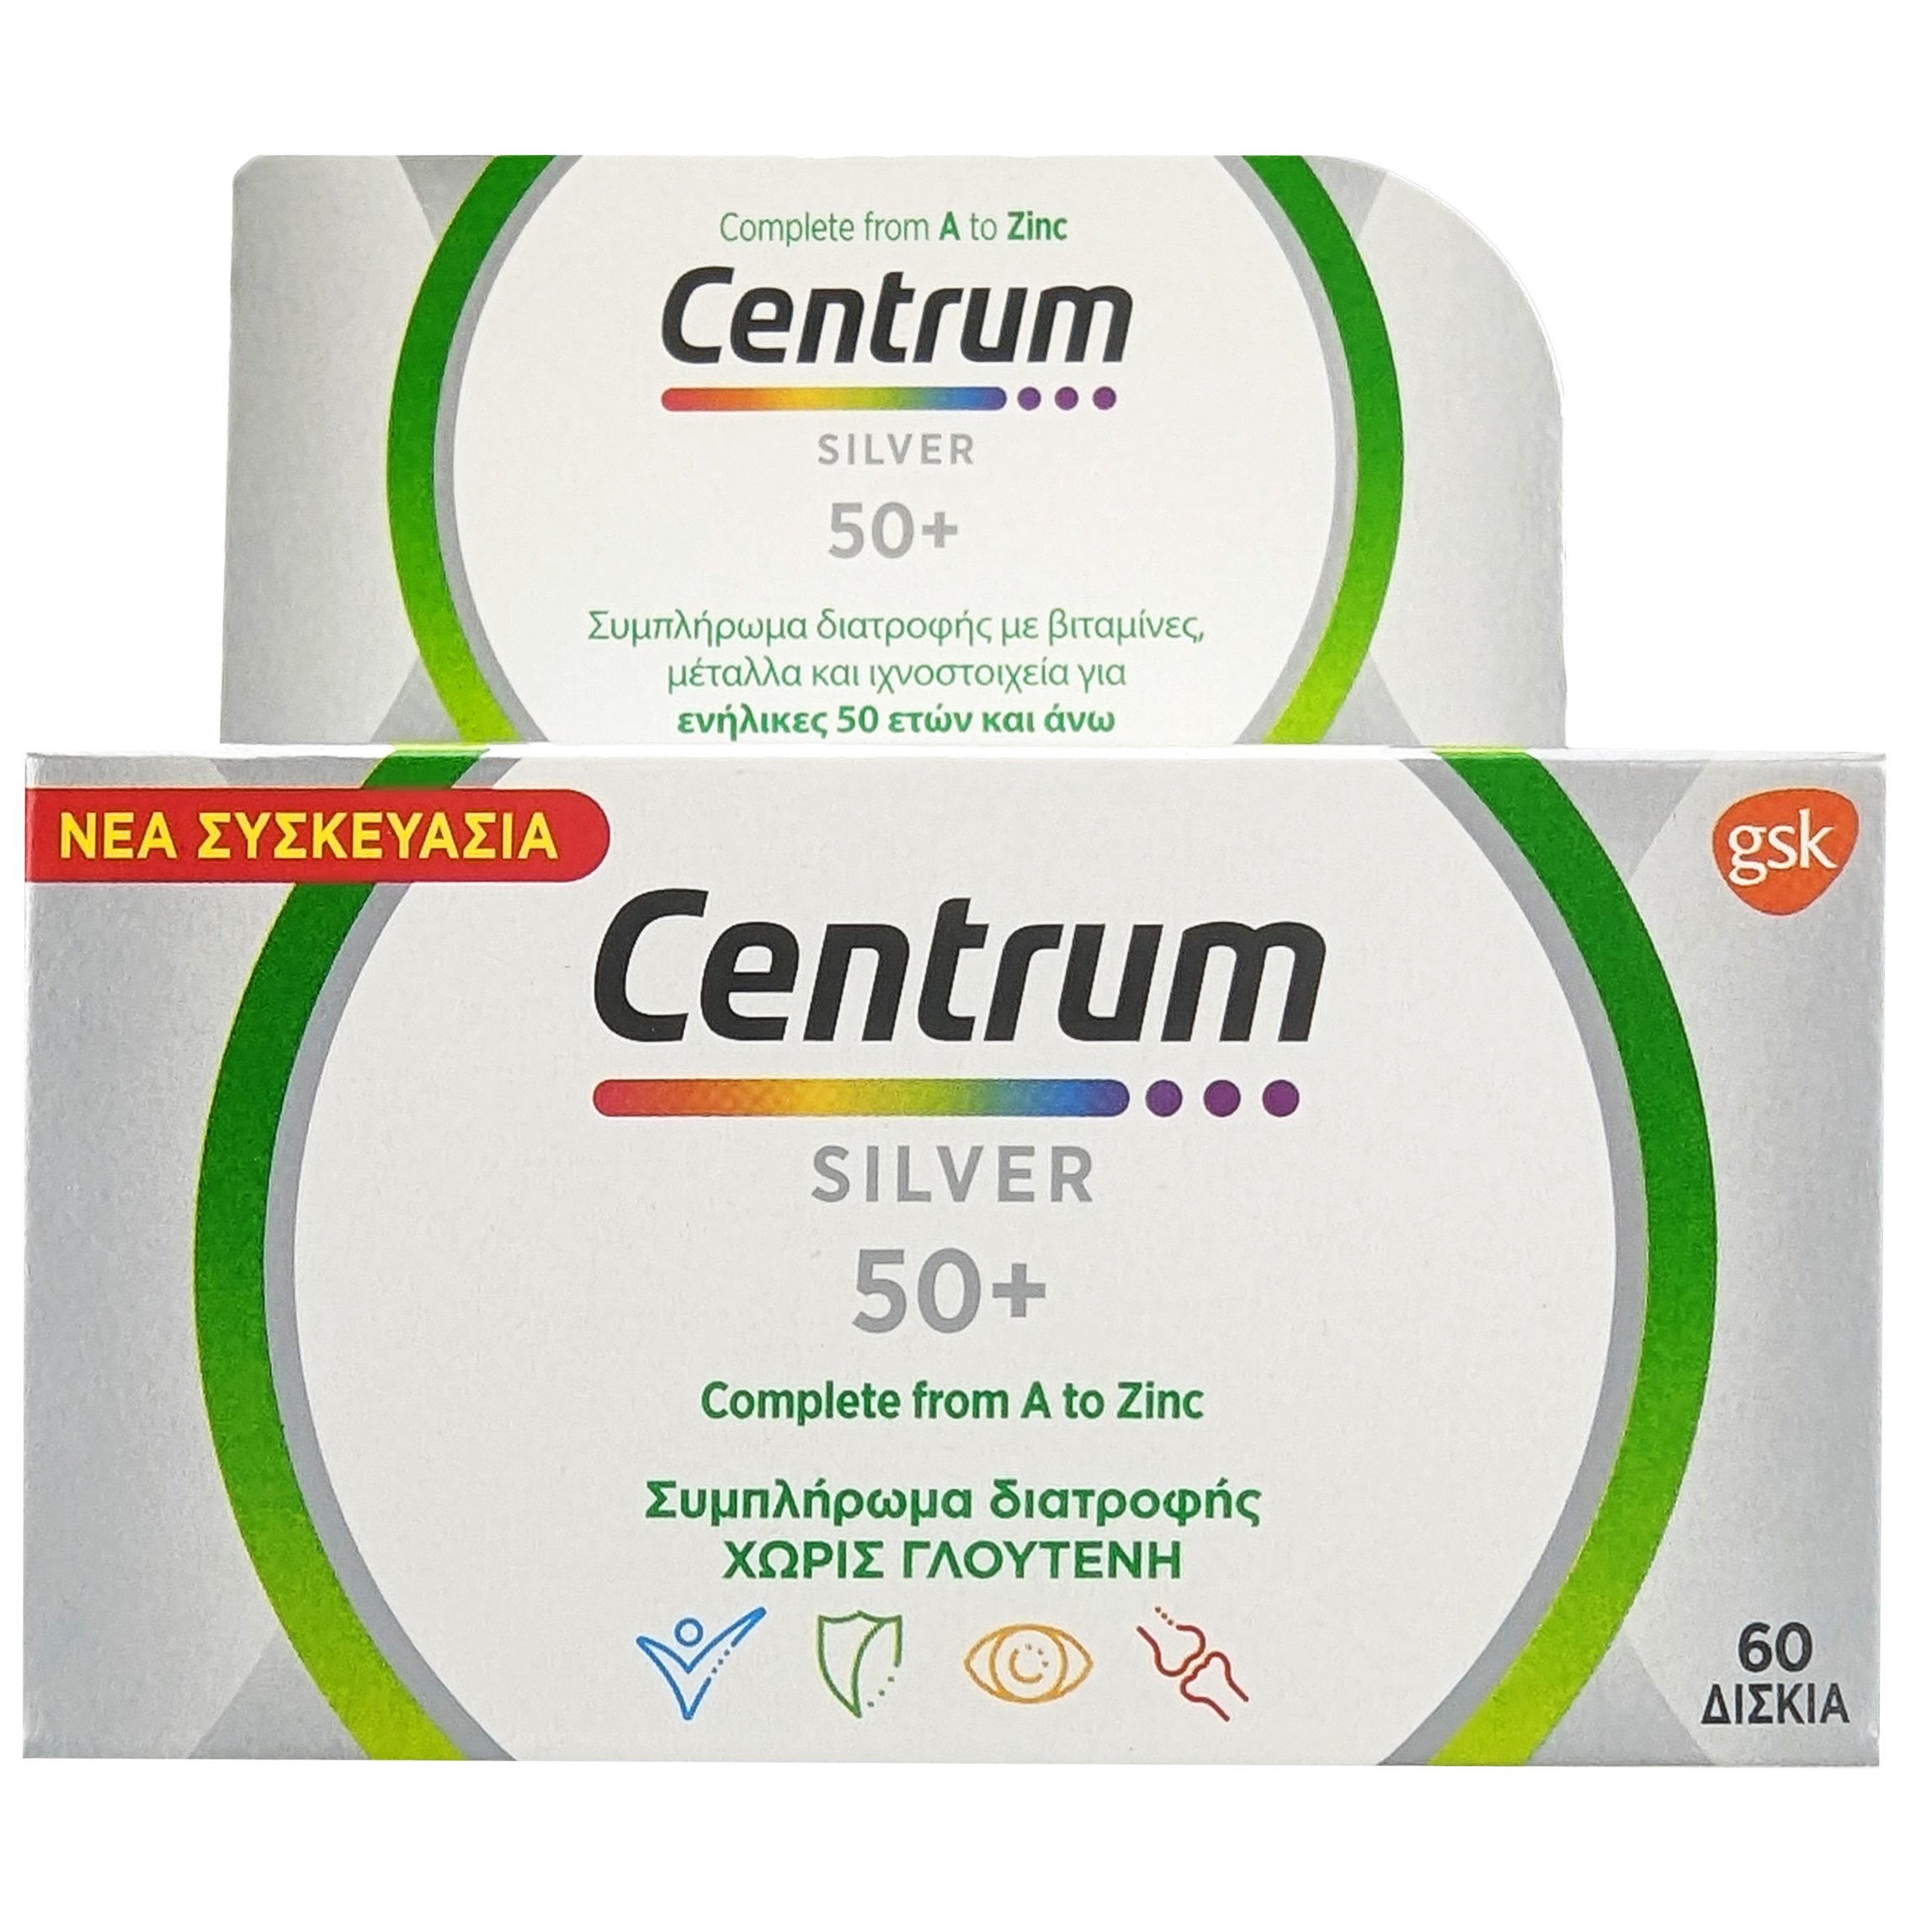 Centrum Silver 50+ Complete from A to Zinc Συμπλήρωμα Διατροφής Ιδανικό για Ενήλικες άνω των 50 Ετών 60tabs